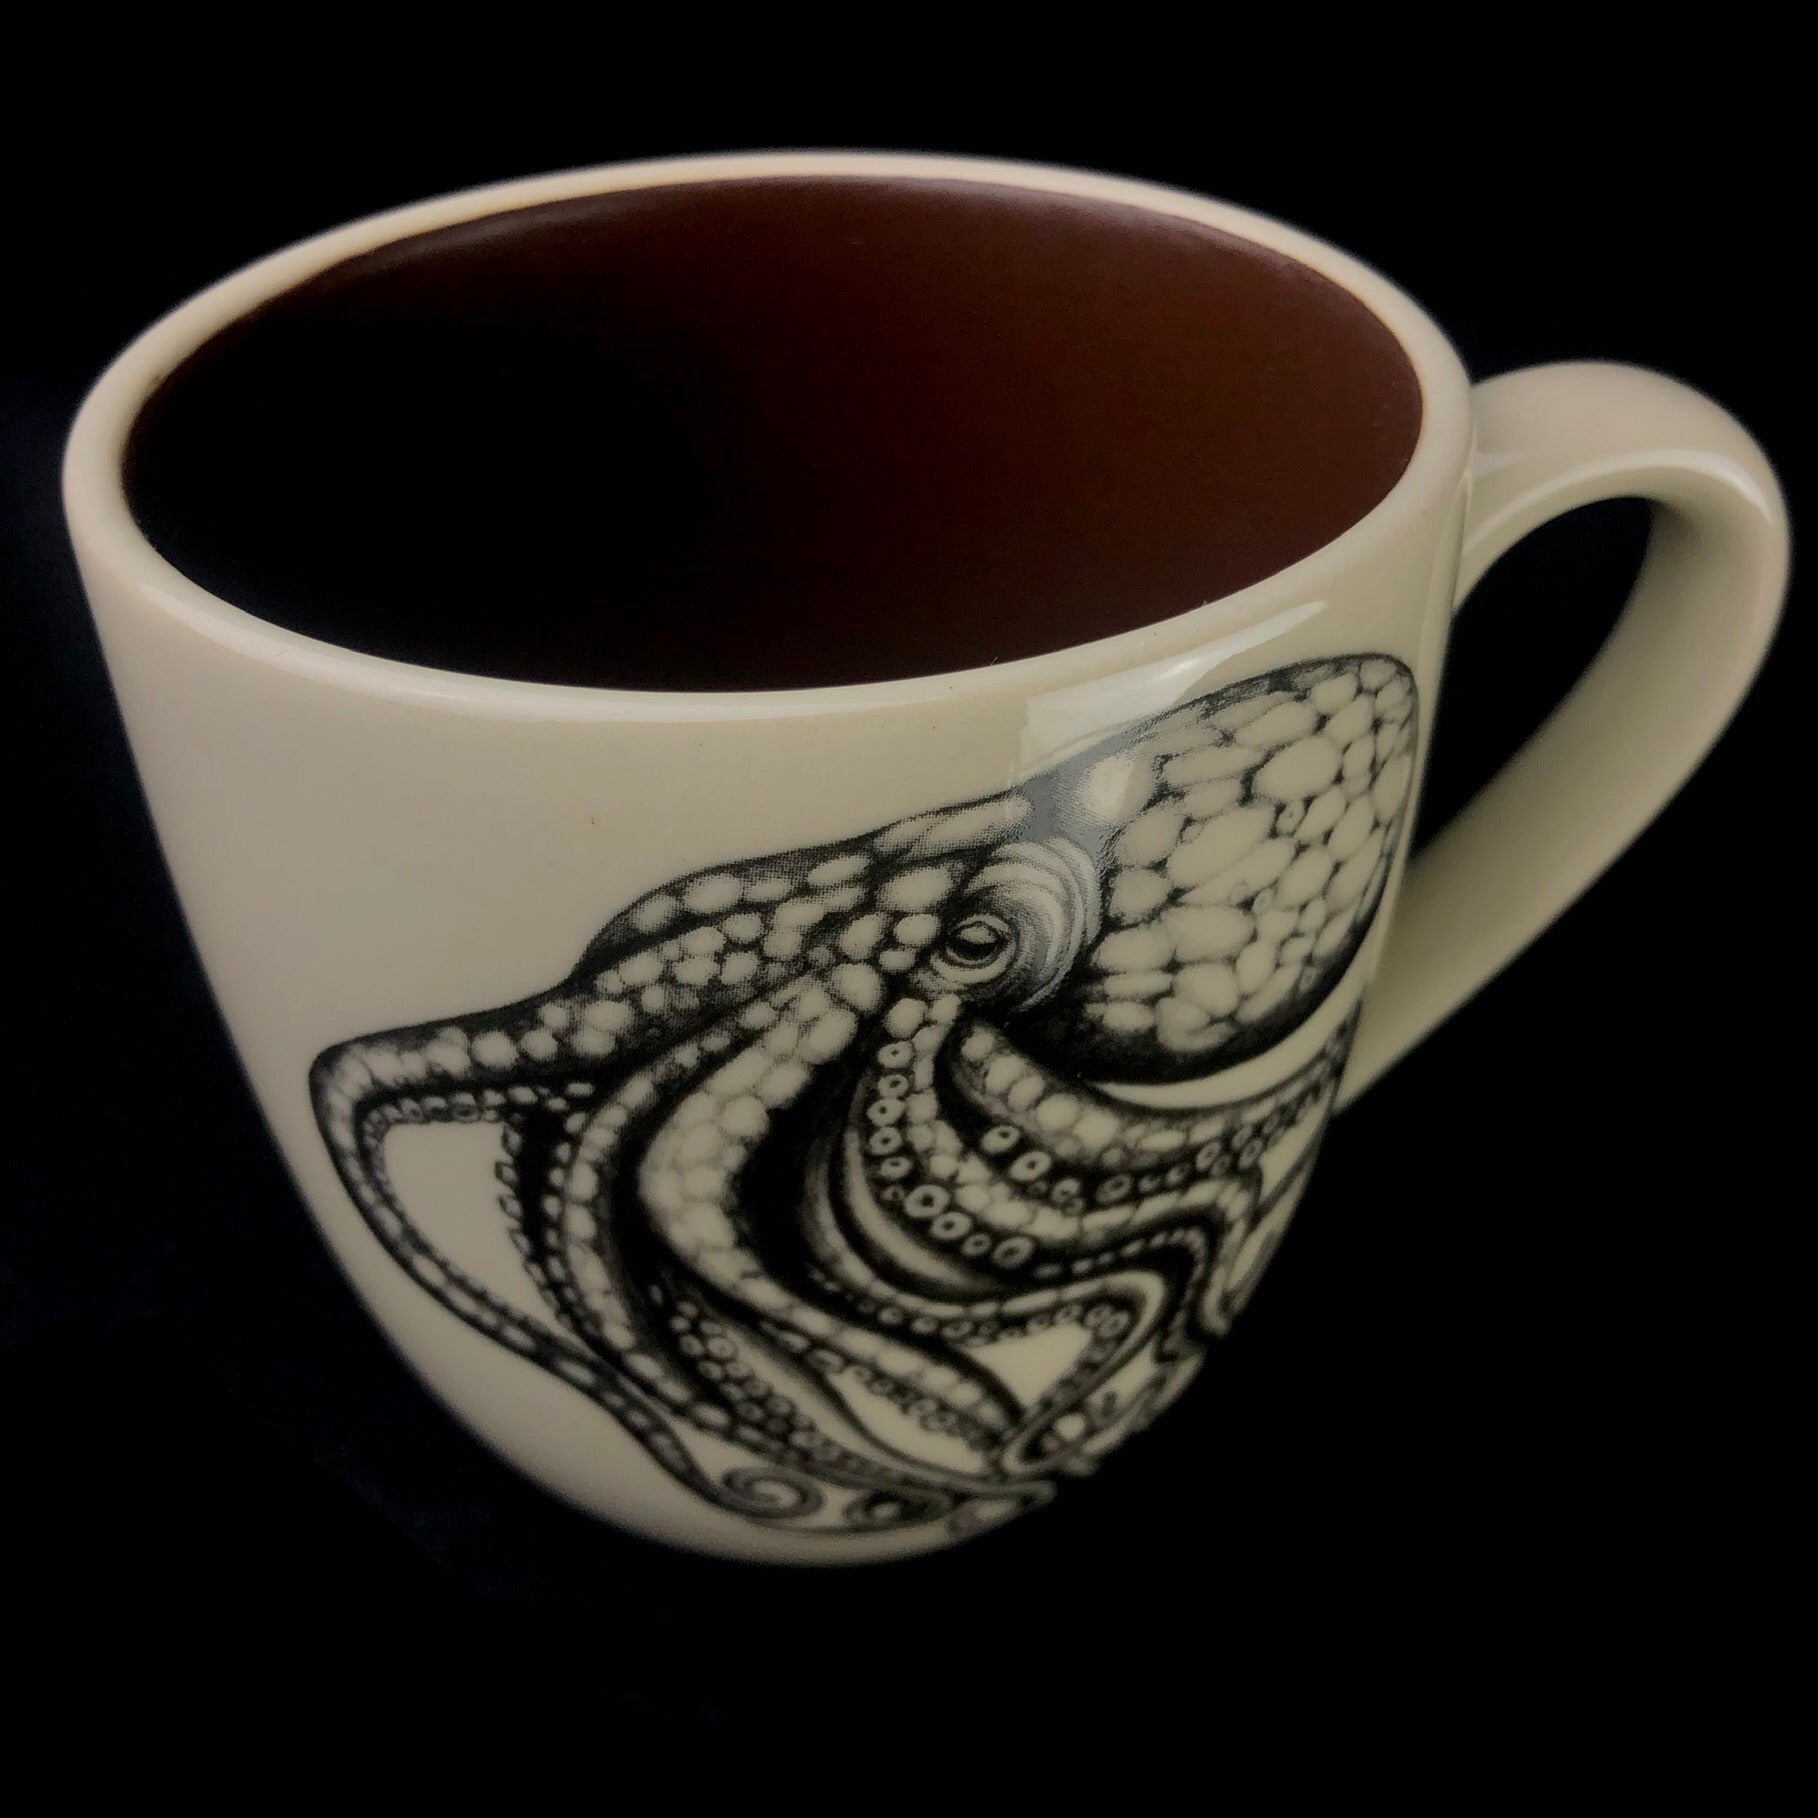 Top view of Octopus Mug